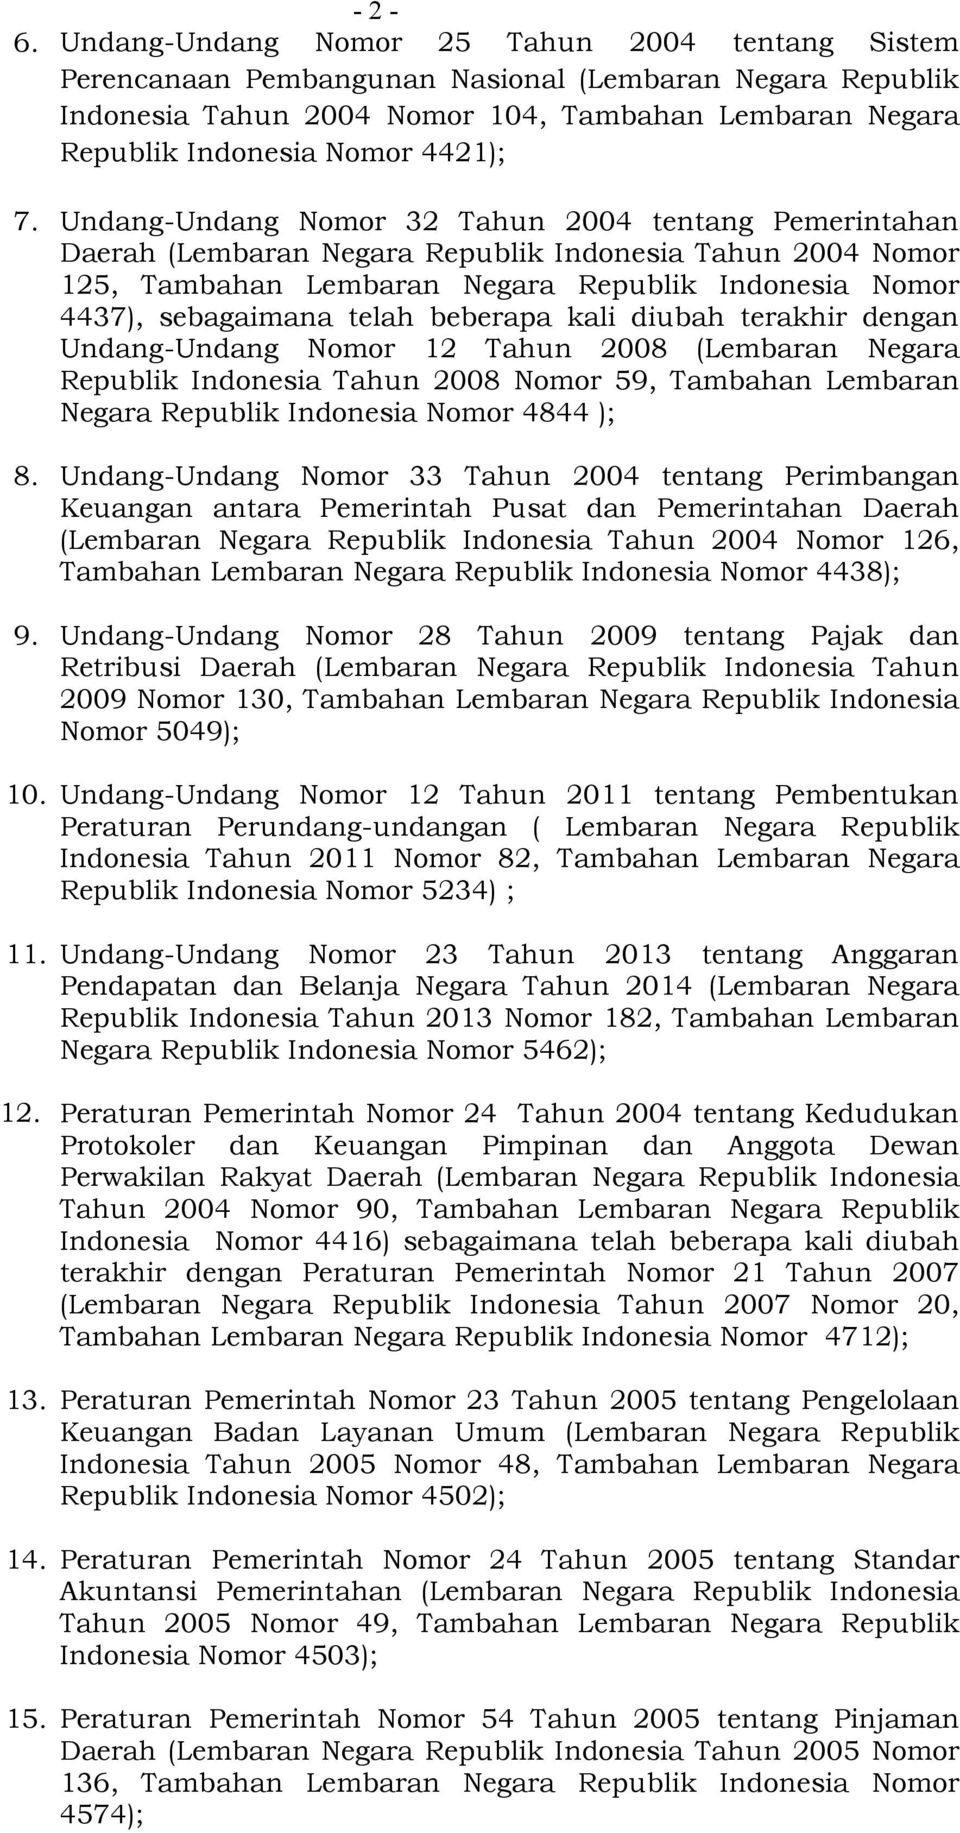 Undang-Undang Nomor 32 Tahun 2004 tentang Pemerintahan Daerah (Lembaran Negara Republik Indonesia Tahun 2004 Nomor 125, Tambahan Lembaran Negara Republik Indonesia Nomor 4437), sebagaimana telah